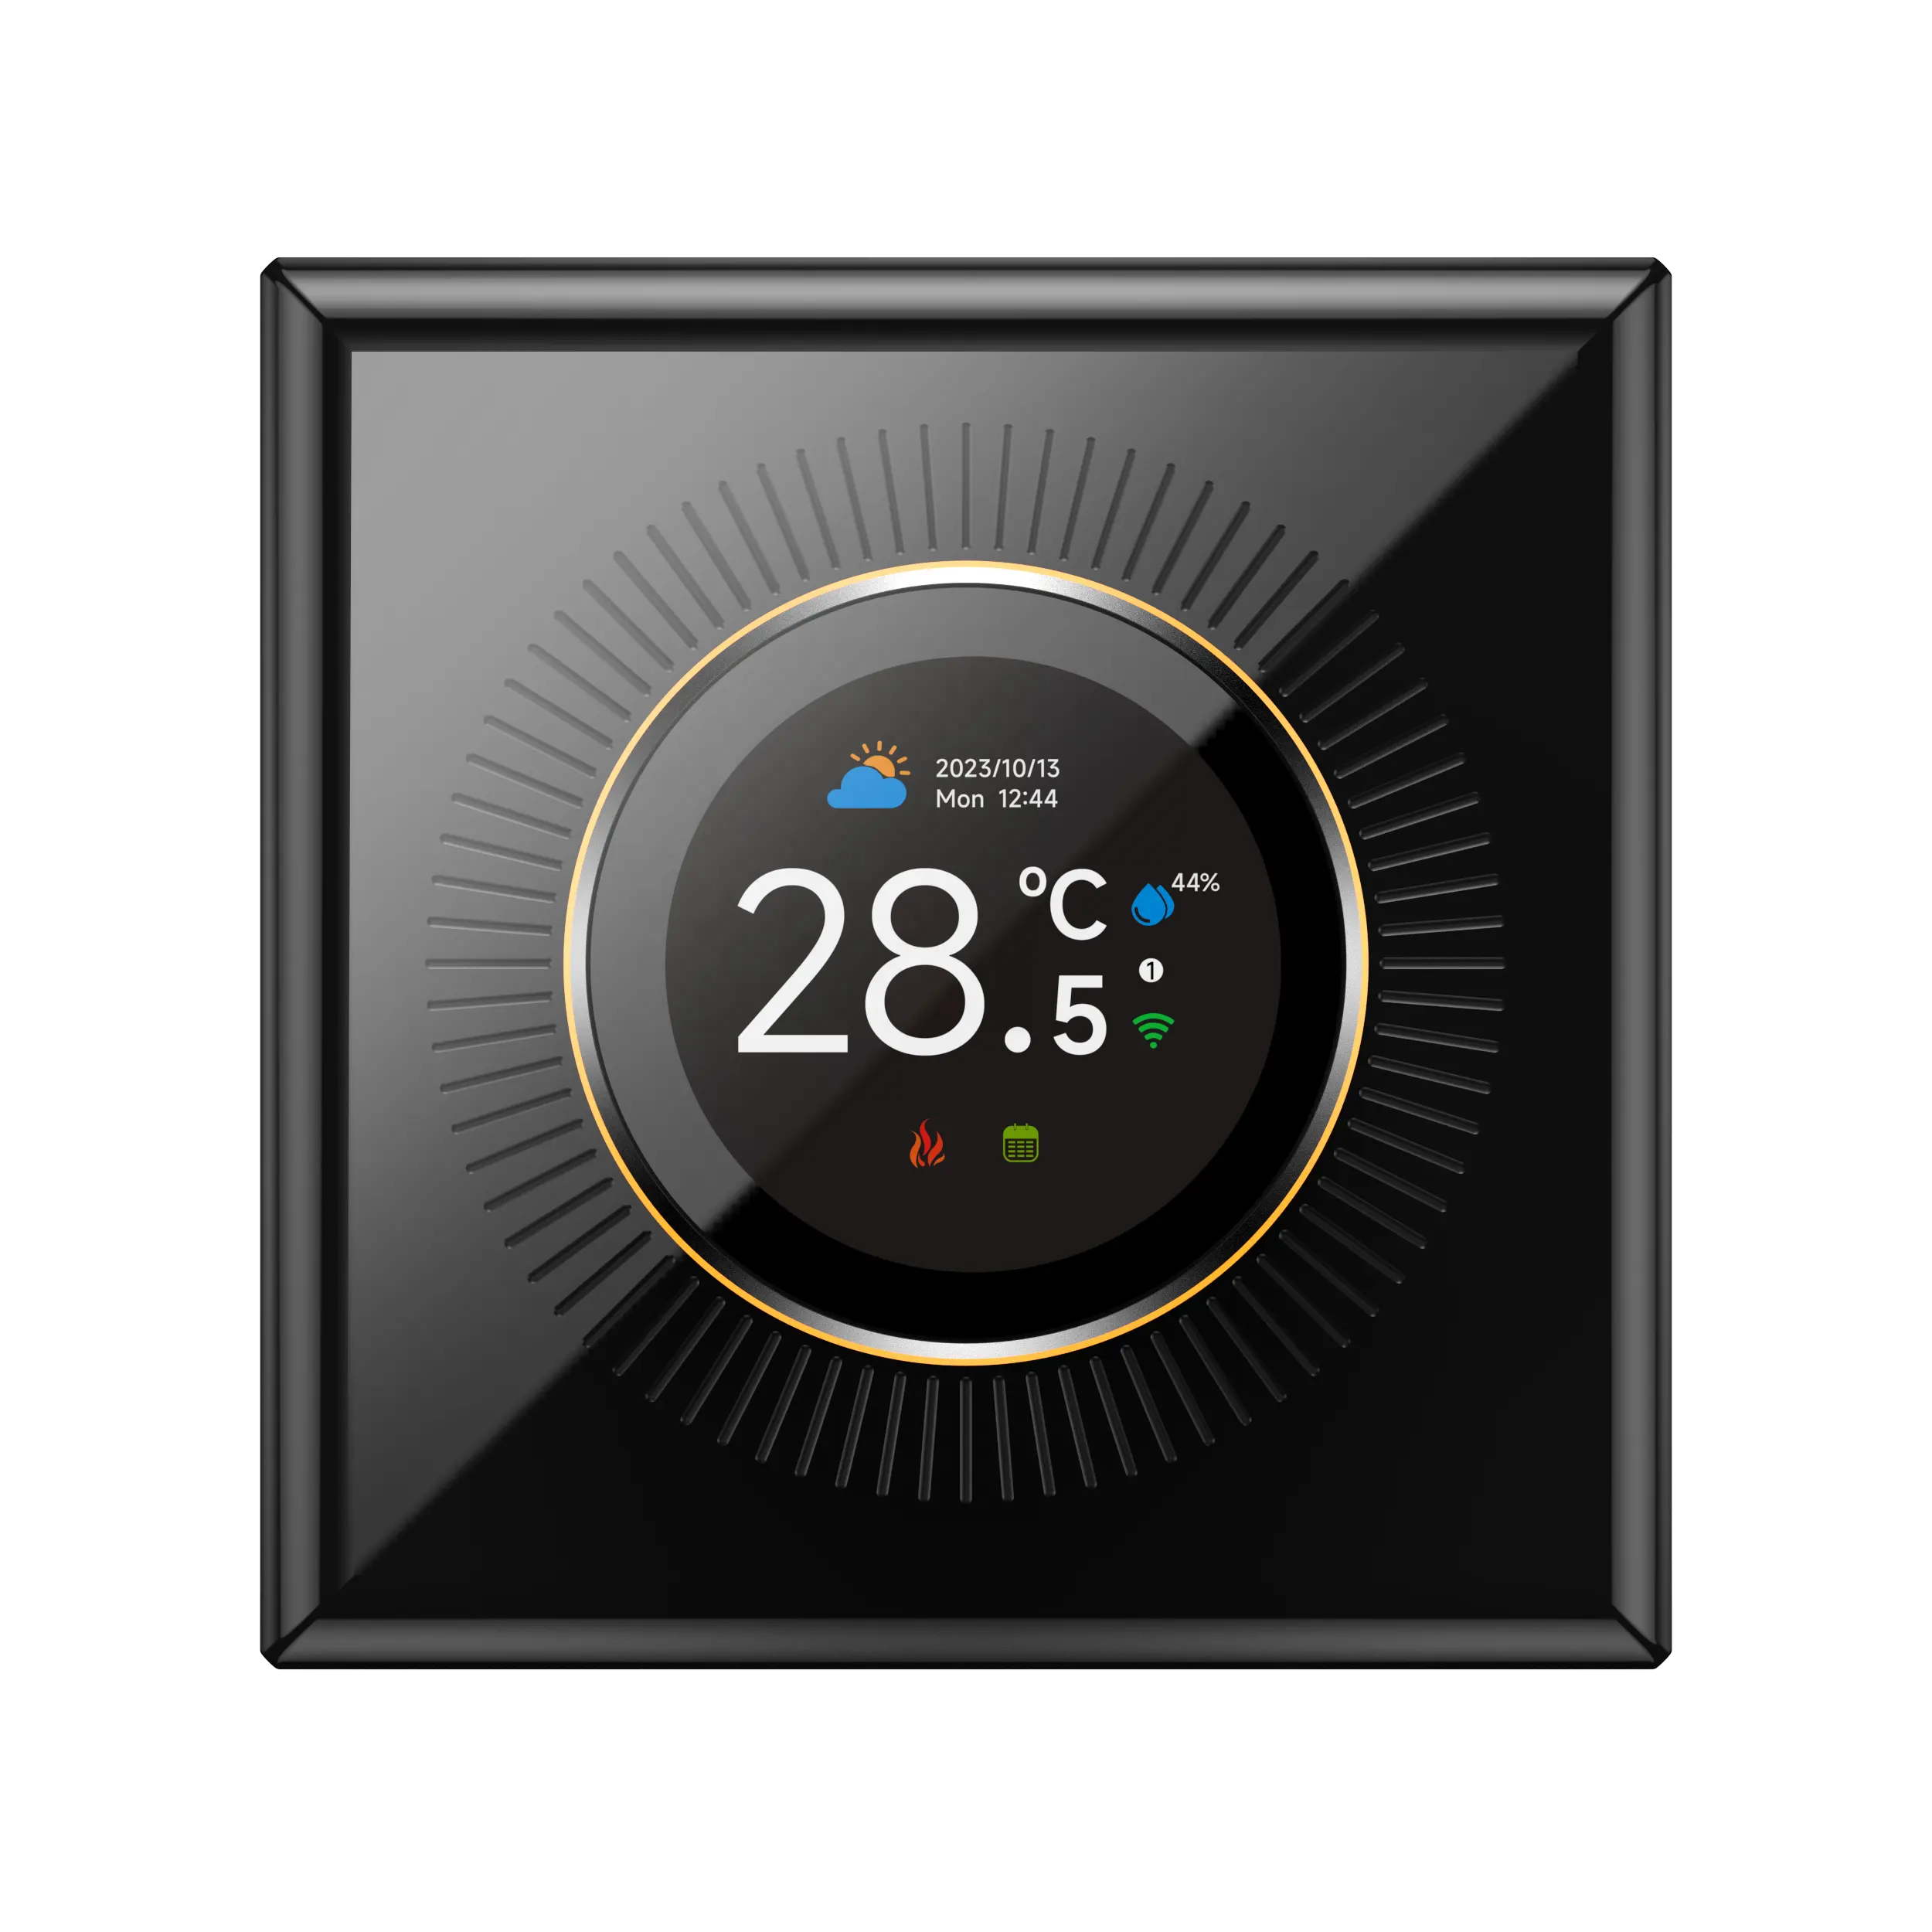 Moderno 5A Smart TFT Knob WiFi Termostato TUYA App Compatible con Alexa Google Assistant Caldera de agua/gas de siete colores